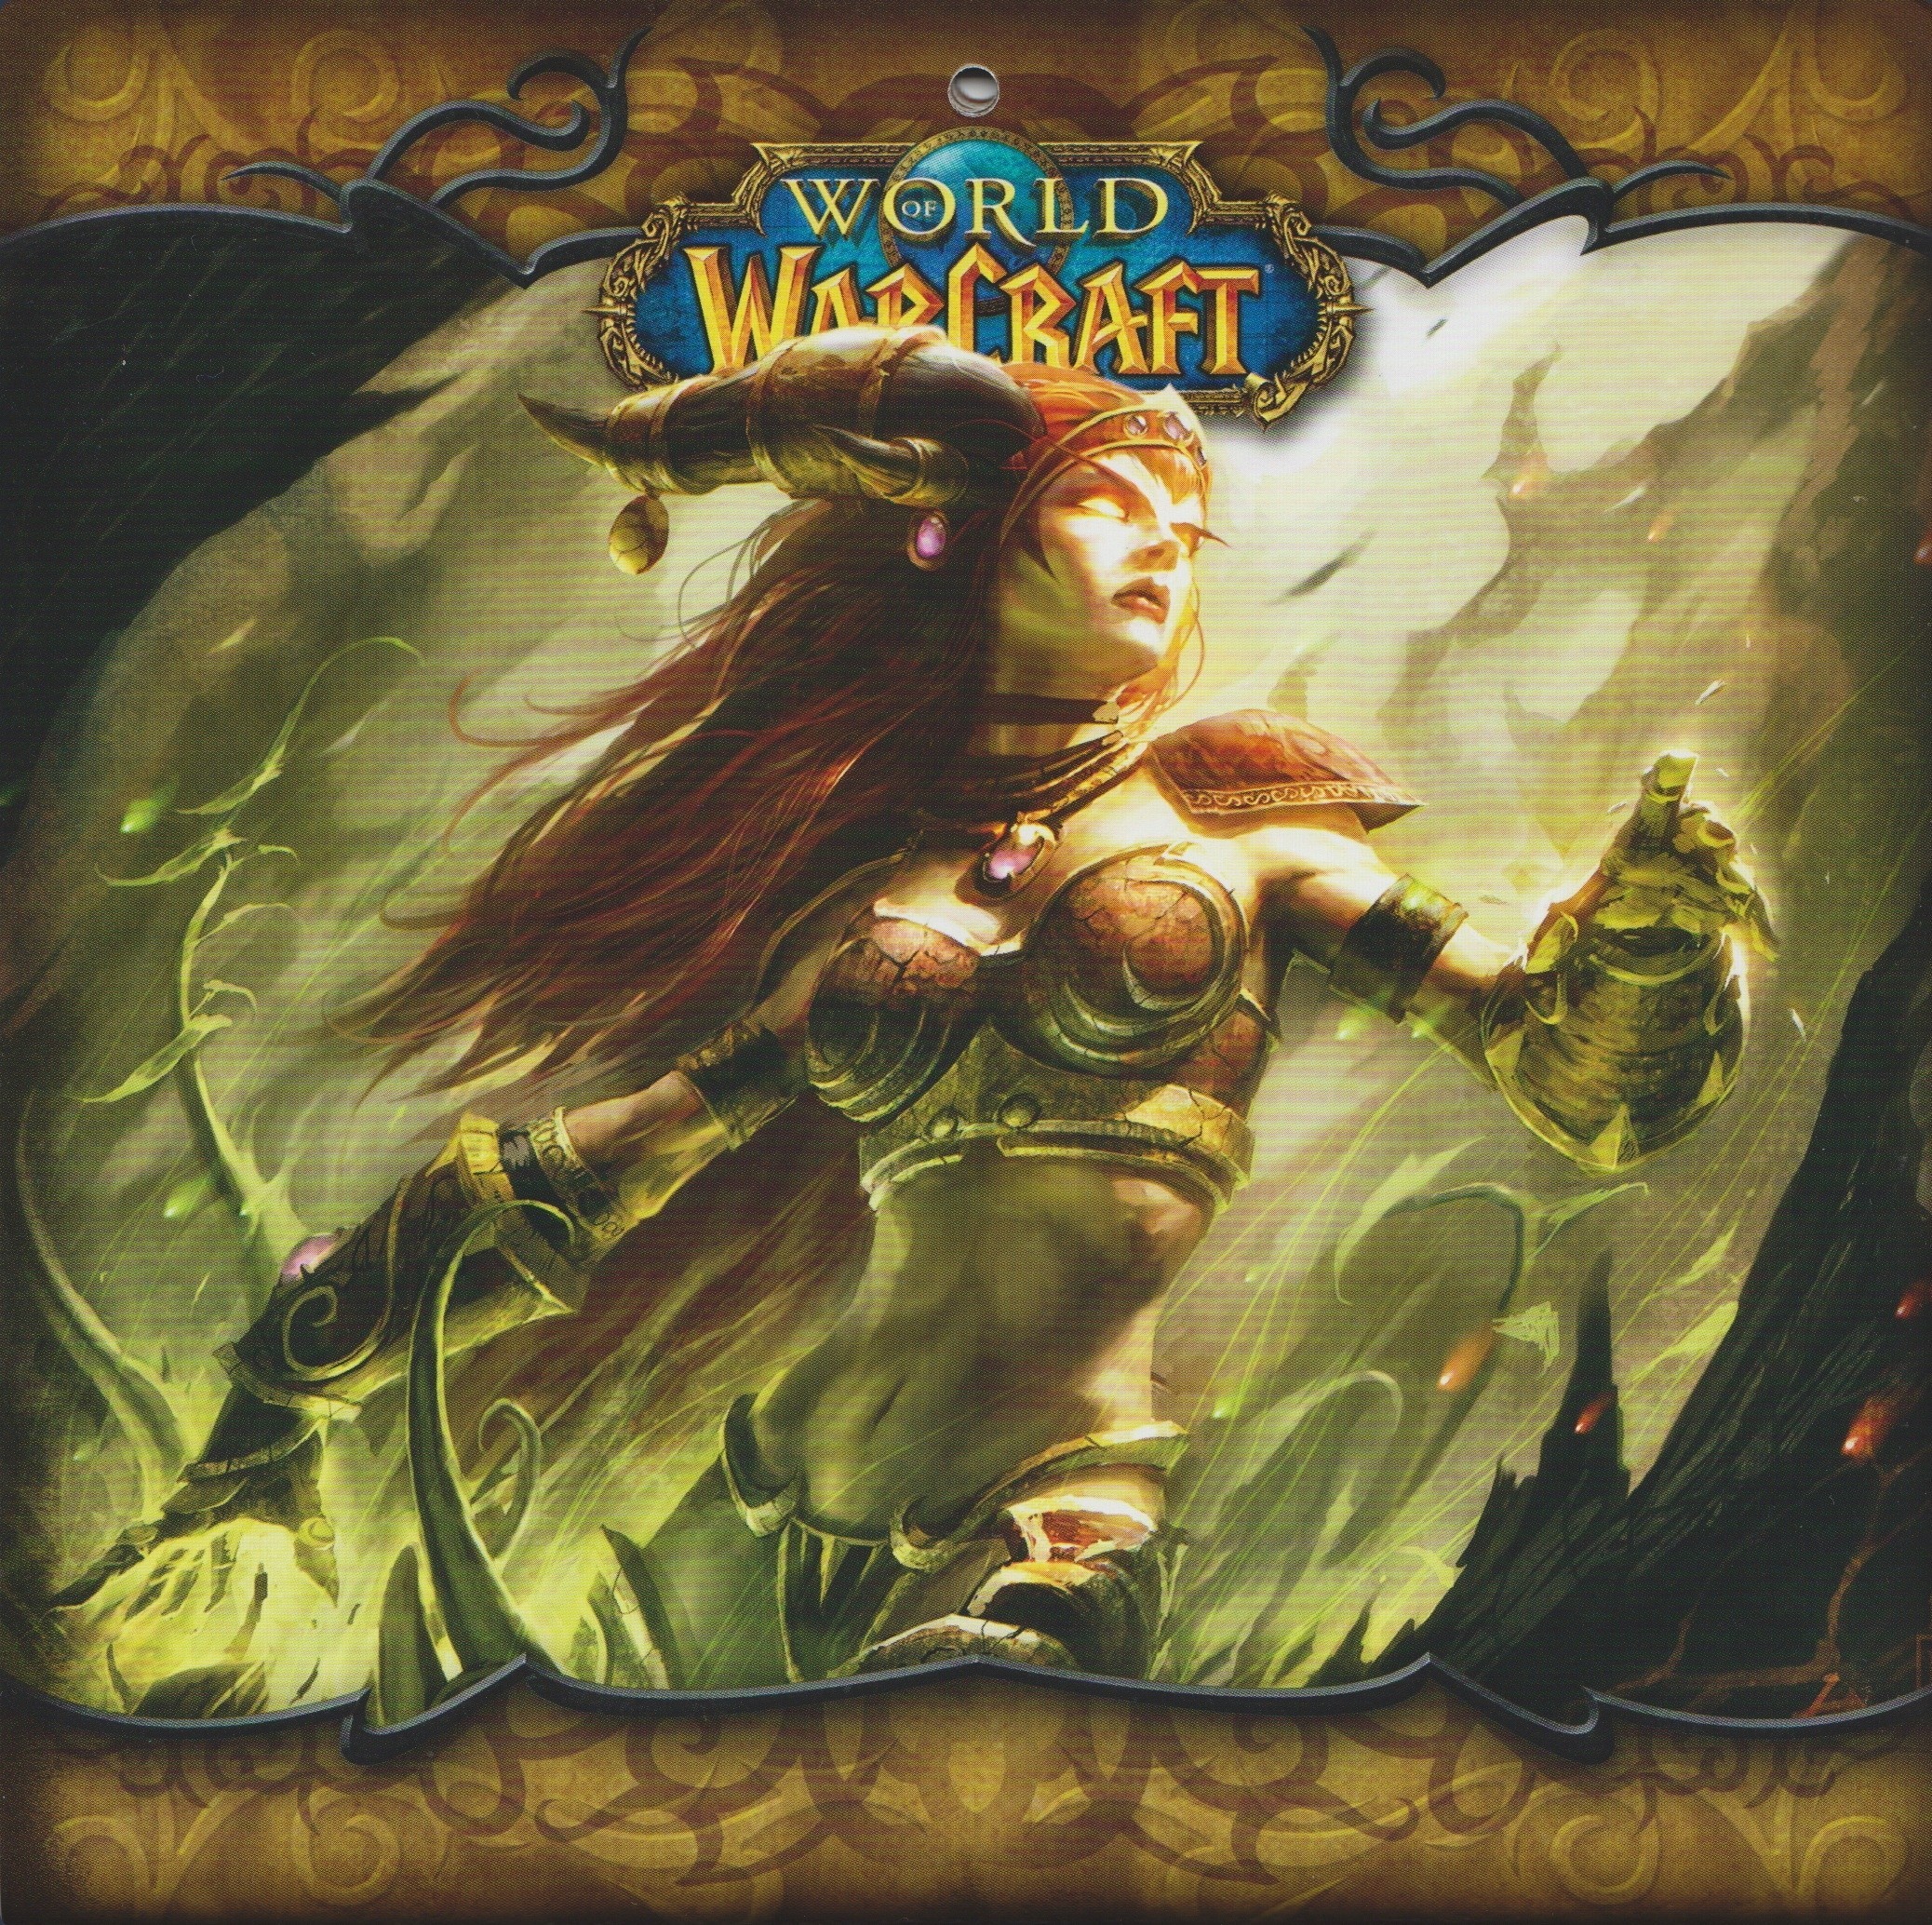 General 2076x2068 Alexstrasza PC gaming fantasy girl World of Warcraft video game art video game girls glowing eyes long hair belly fantasy armor